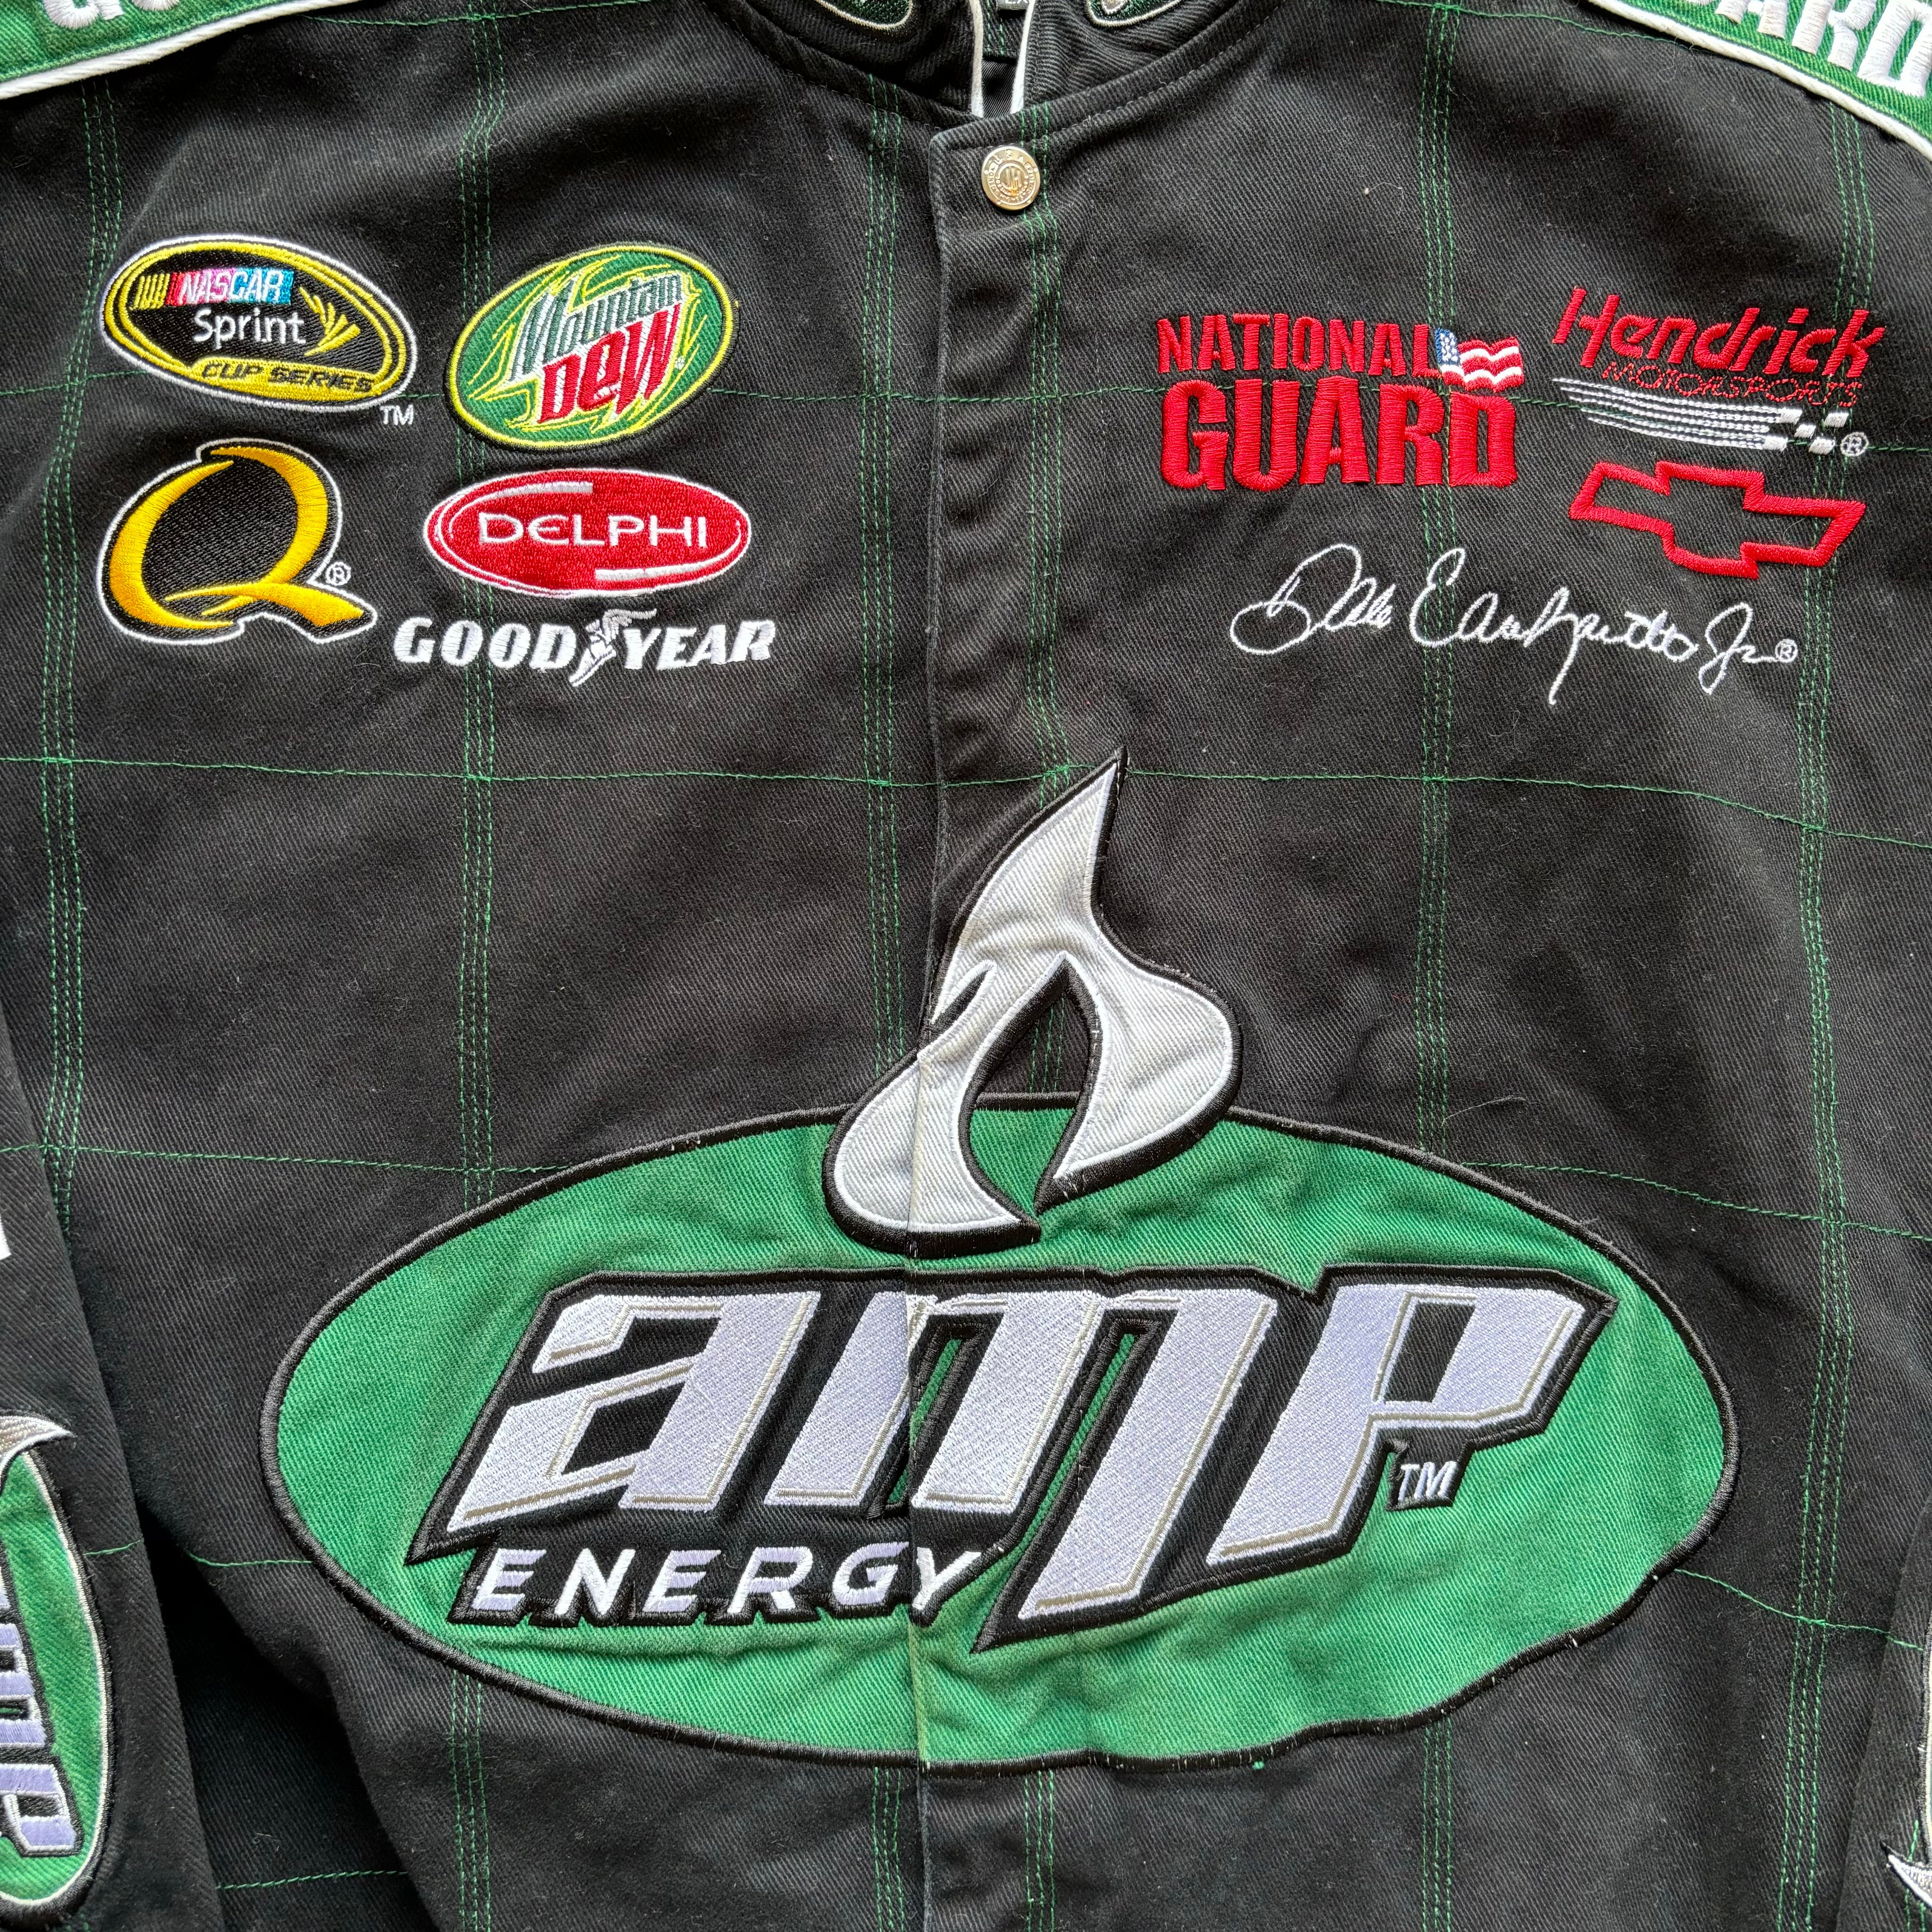 Amp Energy Nascar Racing jacket